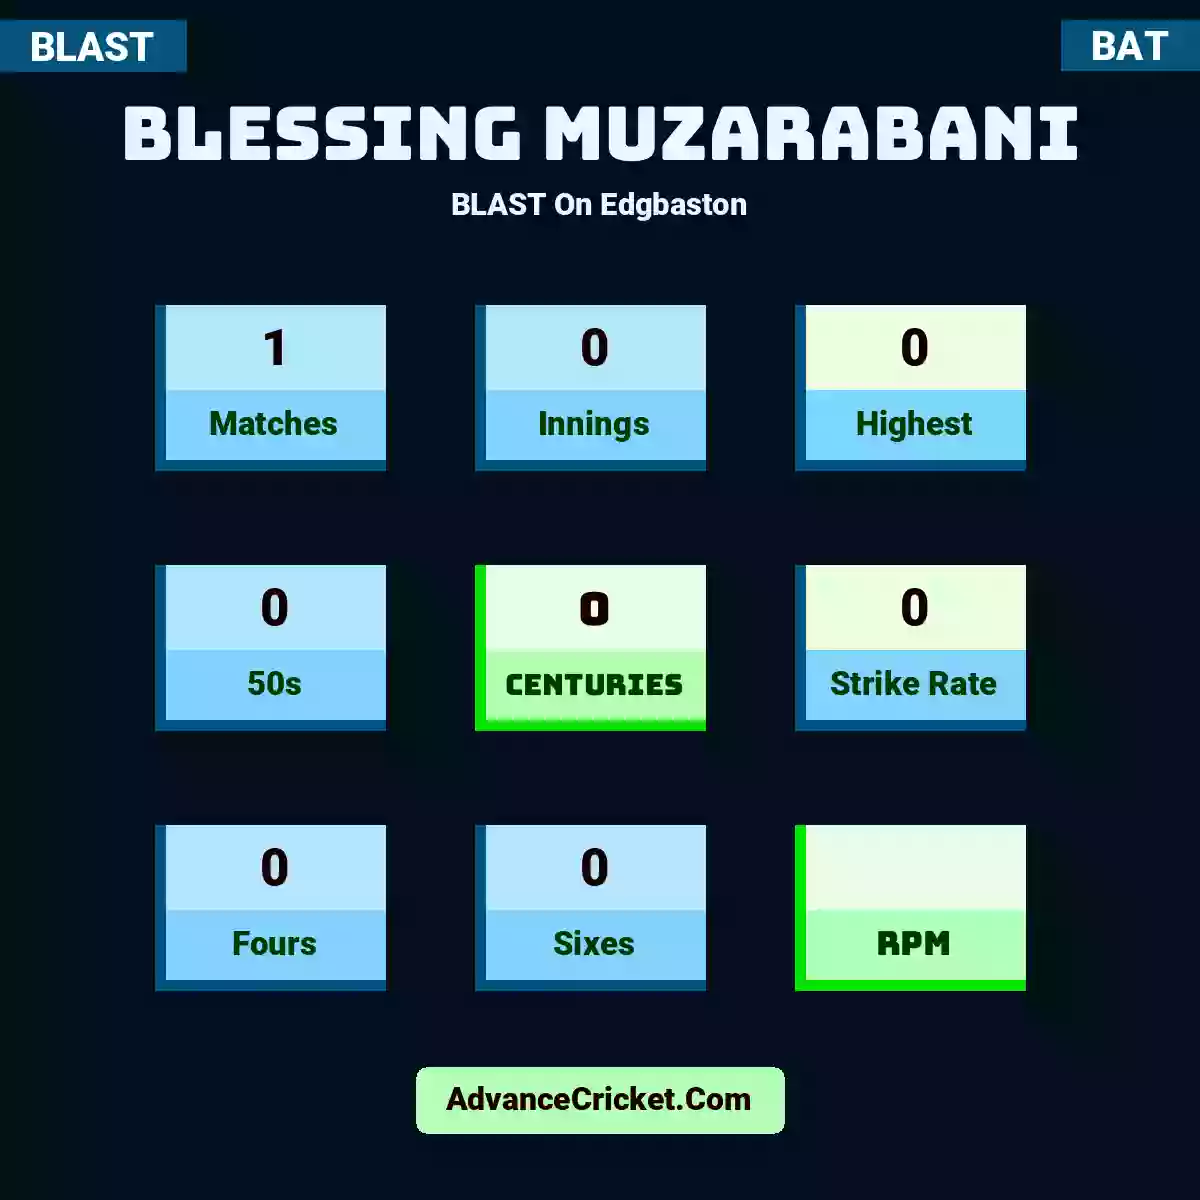 Blessing Muzarabani BLAST  On Edgbaston, Blessing Muzarabani played 1 matches, scored 0 runs as highest, 0 half-centuries, and 0 centuries, with a strike rate of 0. B.Muzarabani hit 0 fours and 0 sixes.